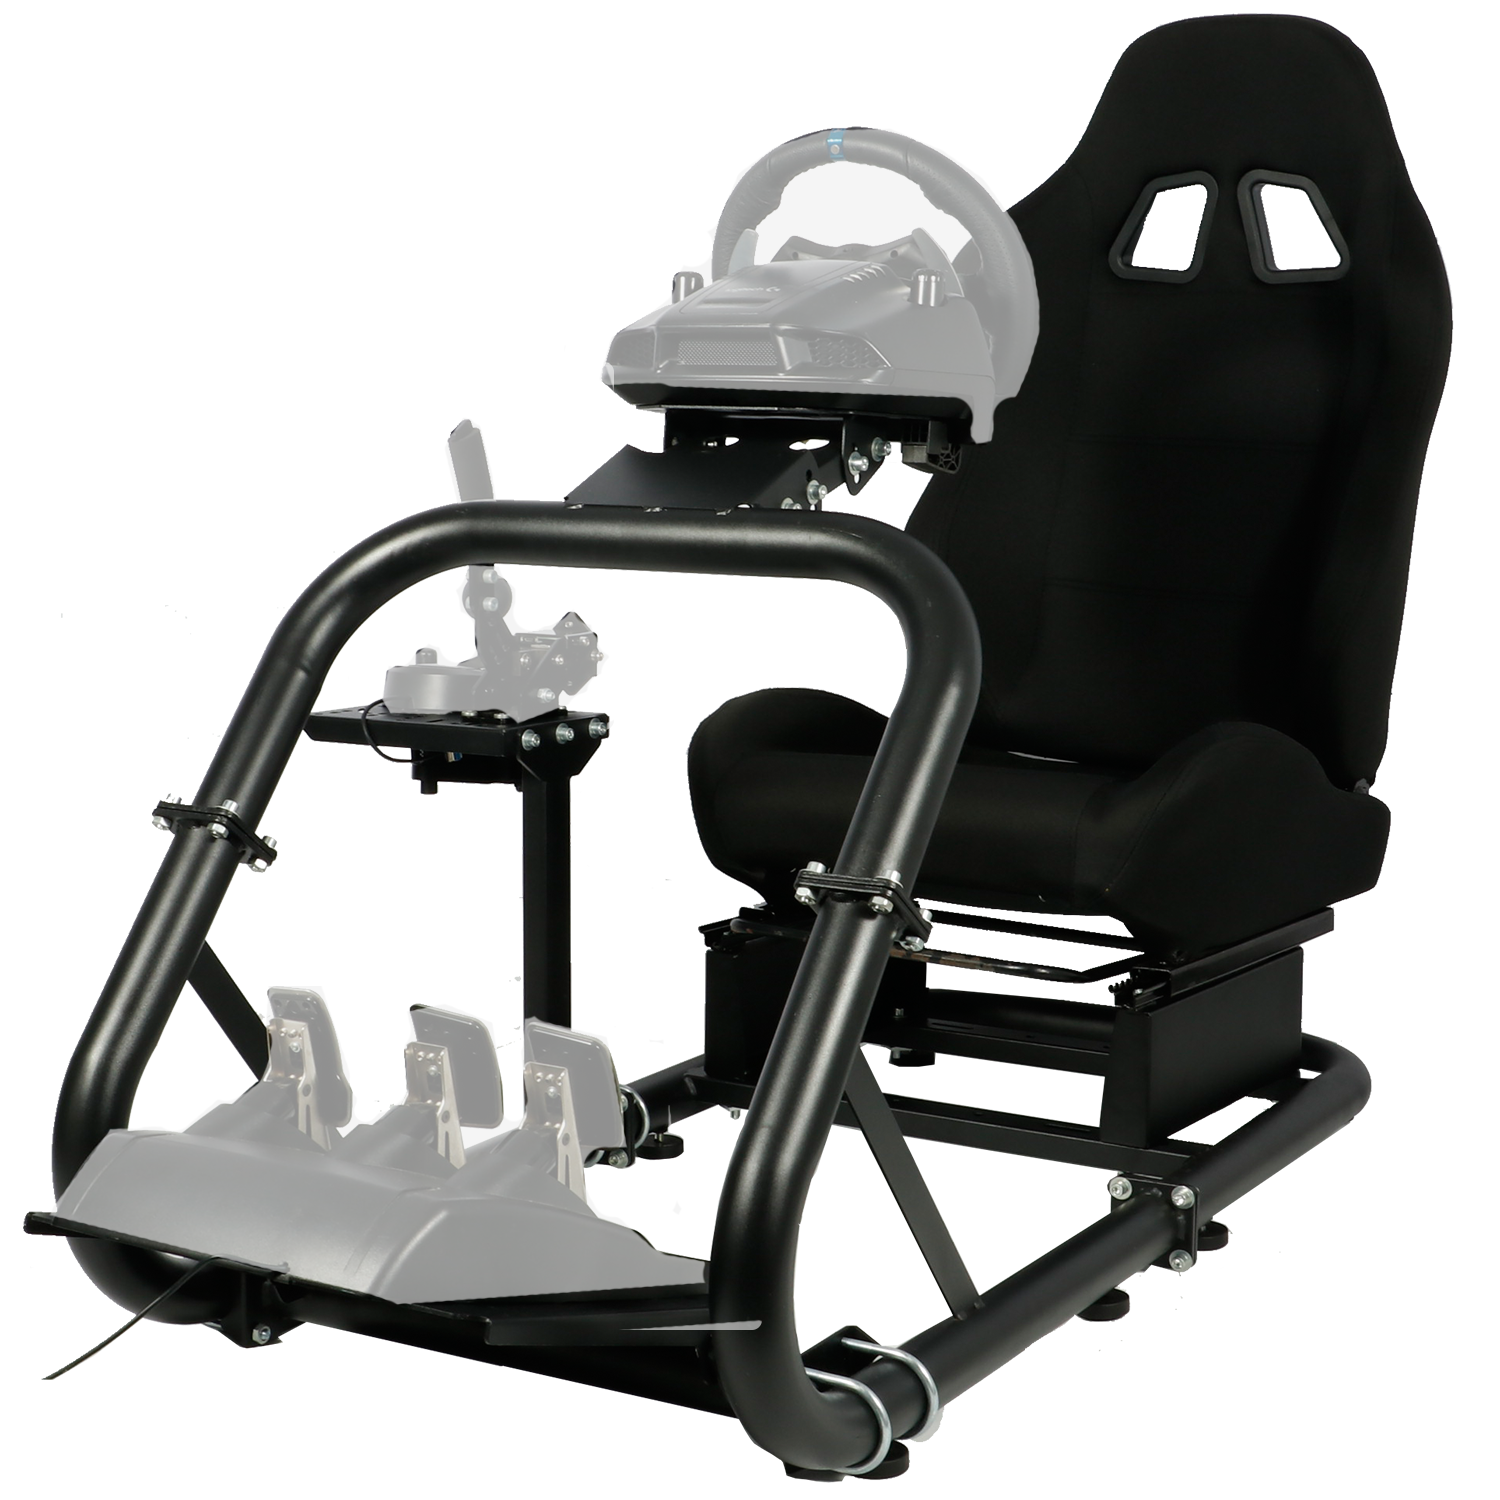 Minneer Sim racing Cockpit Fit for Logitech G25/G27/G29/G920/G923